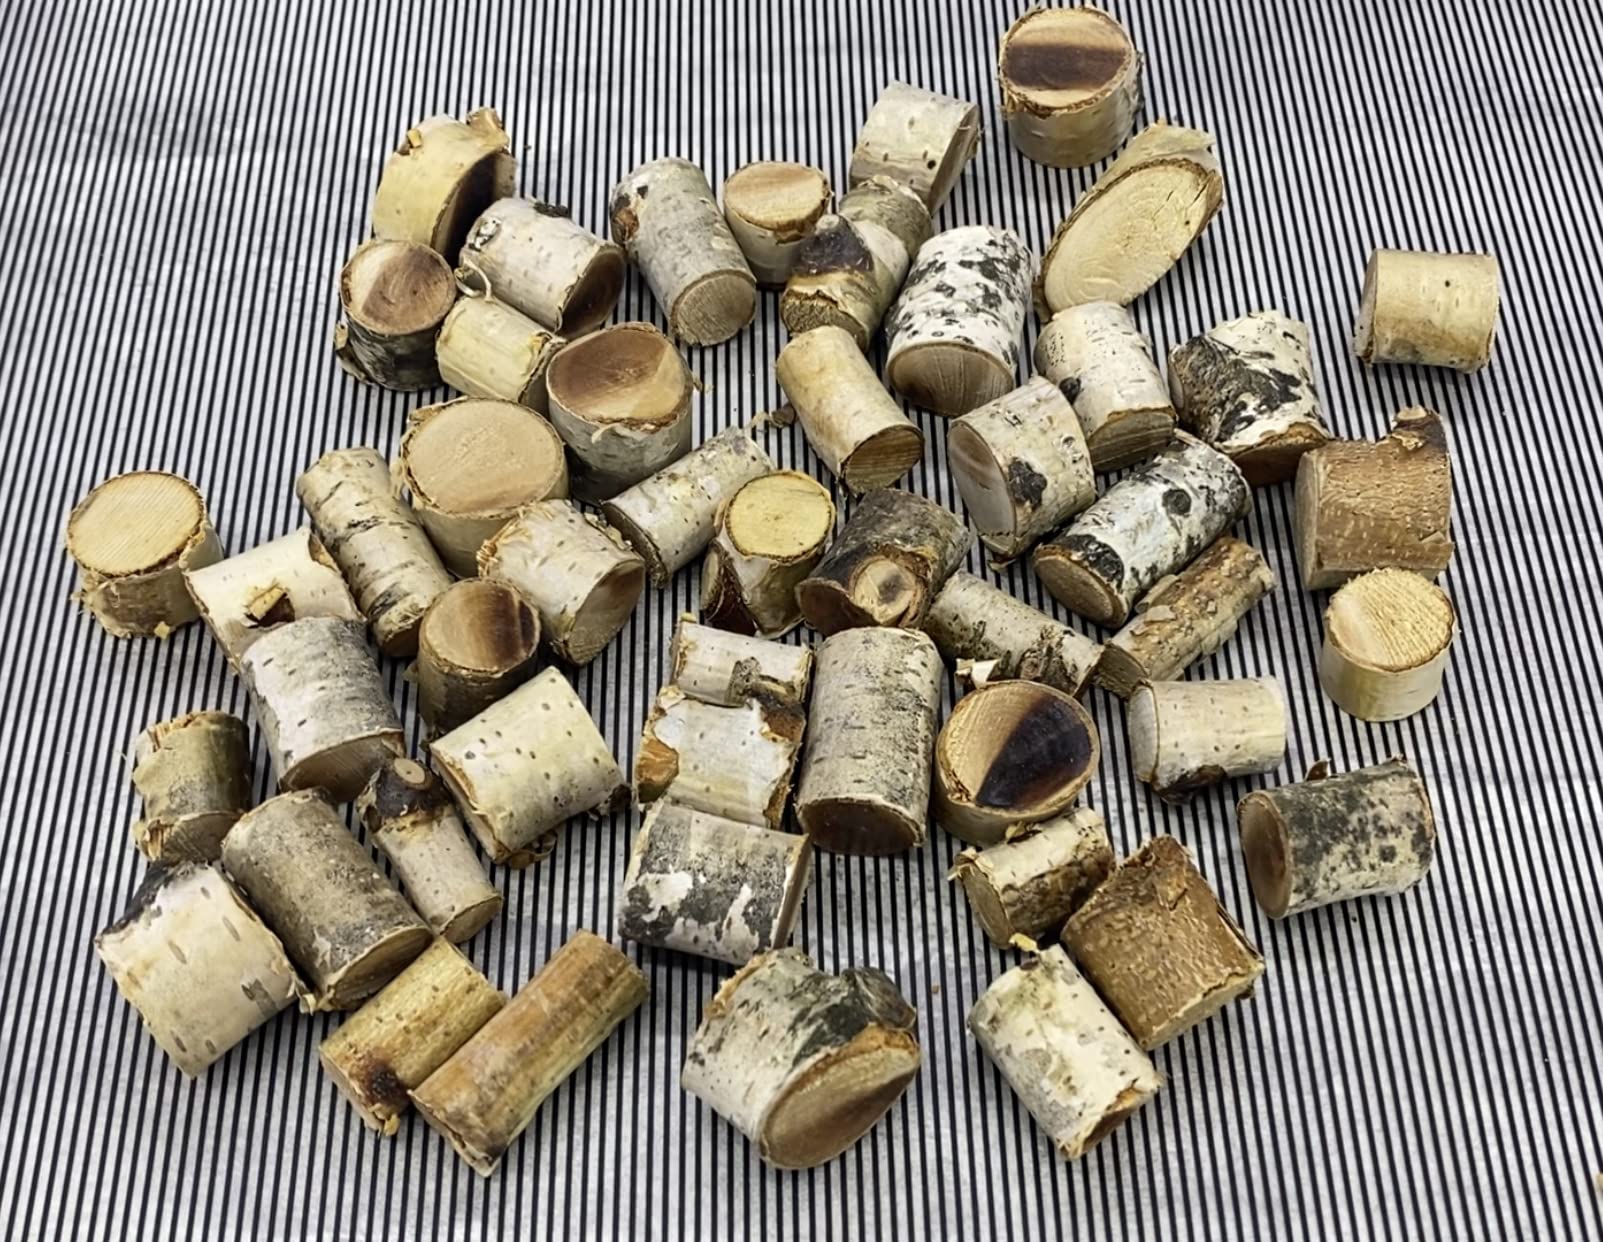 Mini Wood Logs 150 Gram in Pack - Original Craft Wood Sticks, vase Filler,  Birch Small Wood Log, Rustic Home Decor